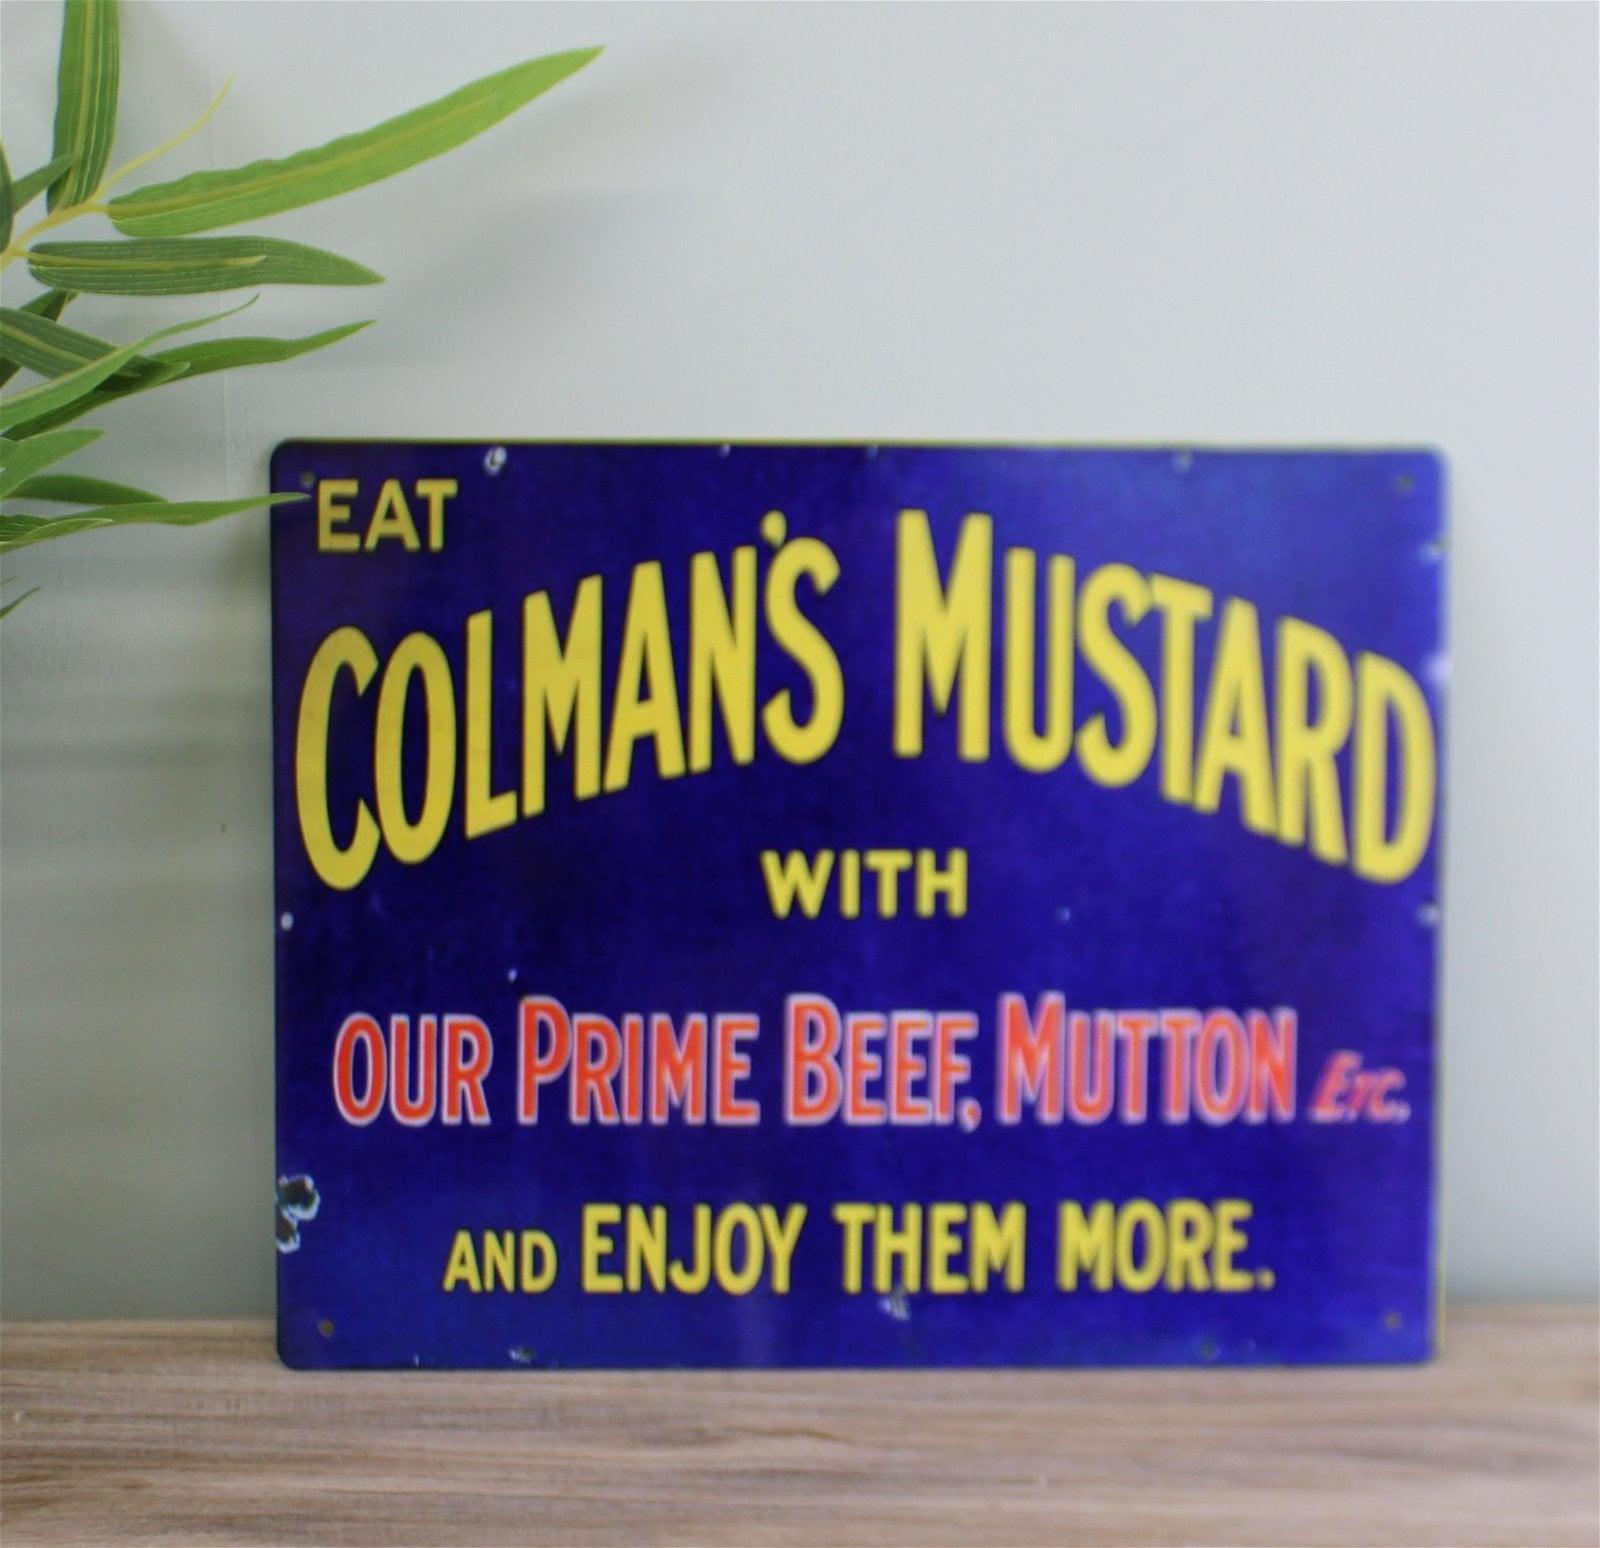 Vintage Metal Sign - Retro Advertising - Colmans Mustard - £18.99 - Retro Advertising 